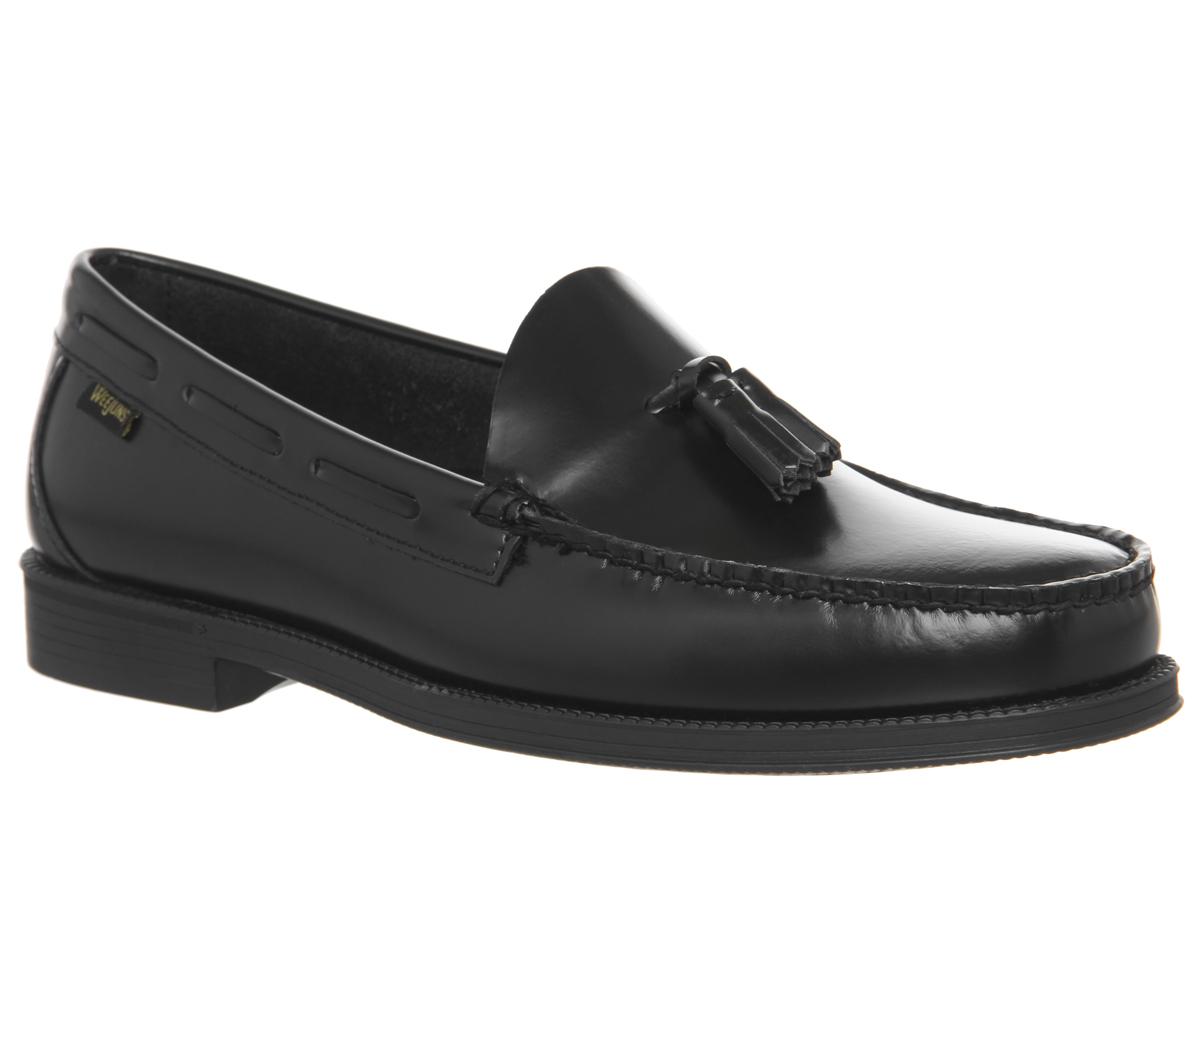 G.H Bass & Co Easy Weejun Tassel Loafers Black - Men’s Smart Shoes